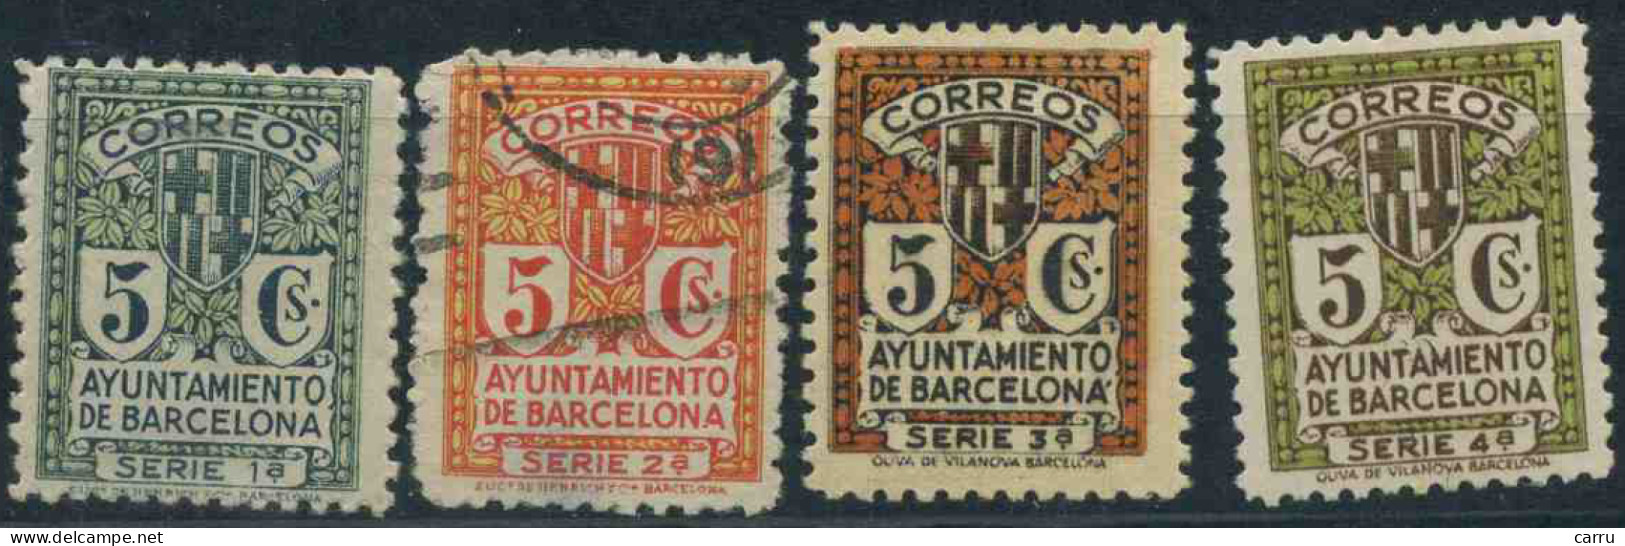 España - Barcelona - 1932-1935 - Barcelone